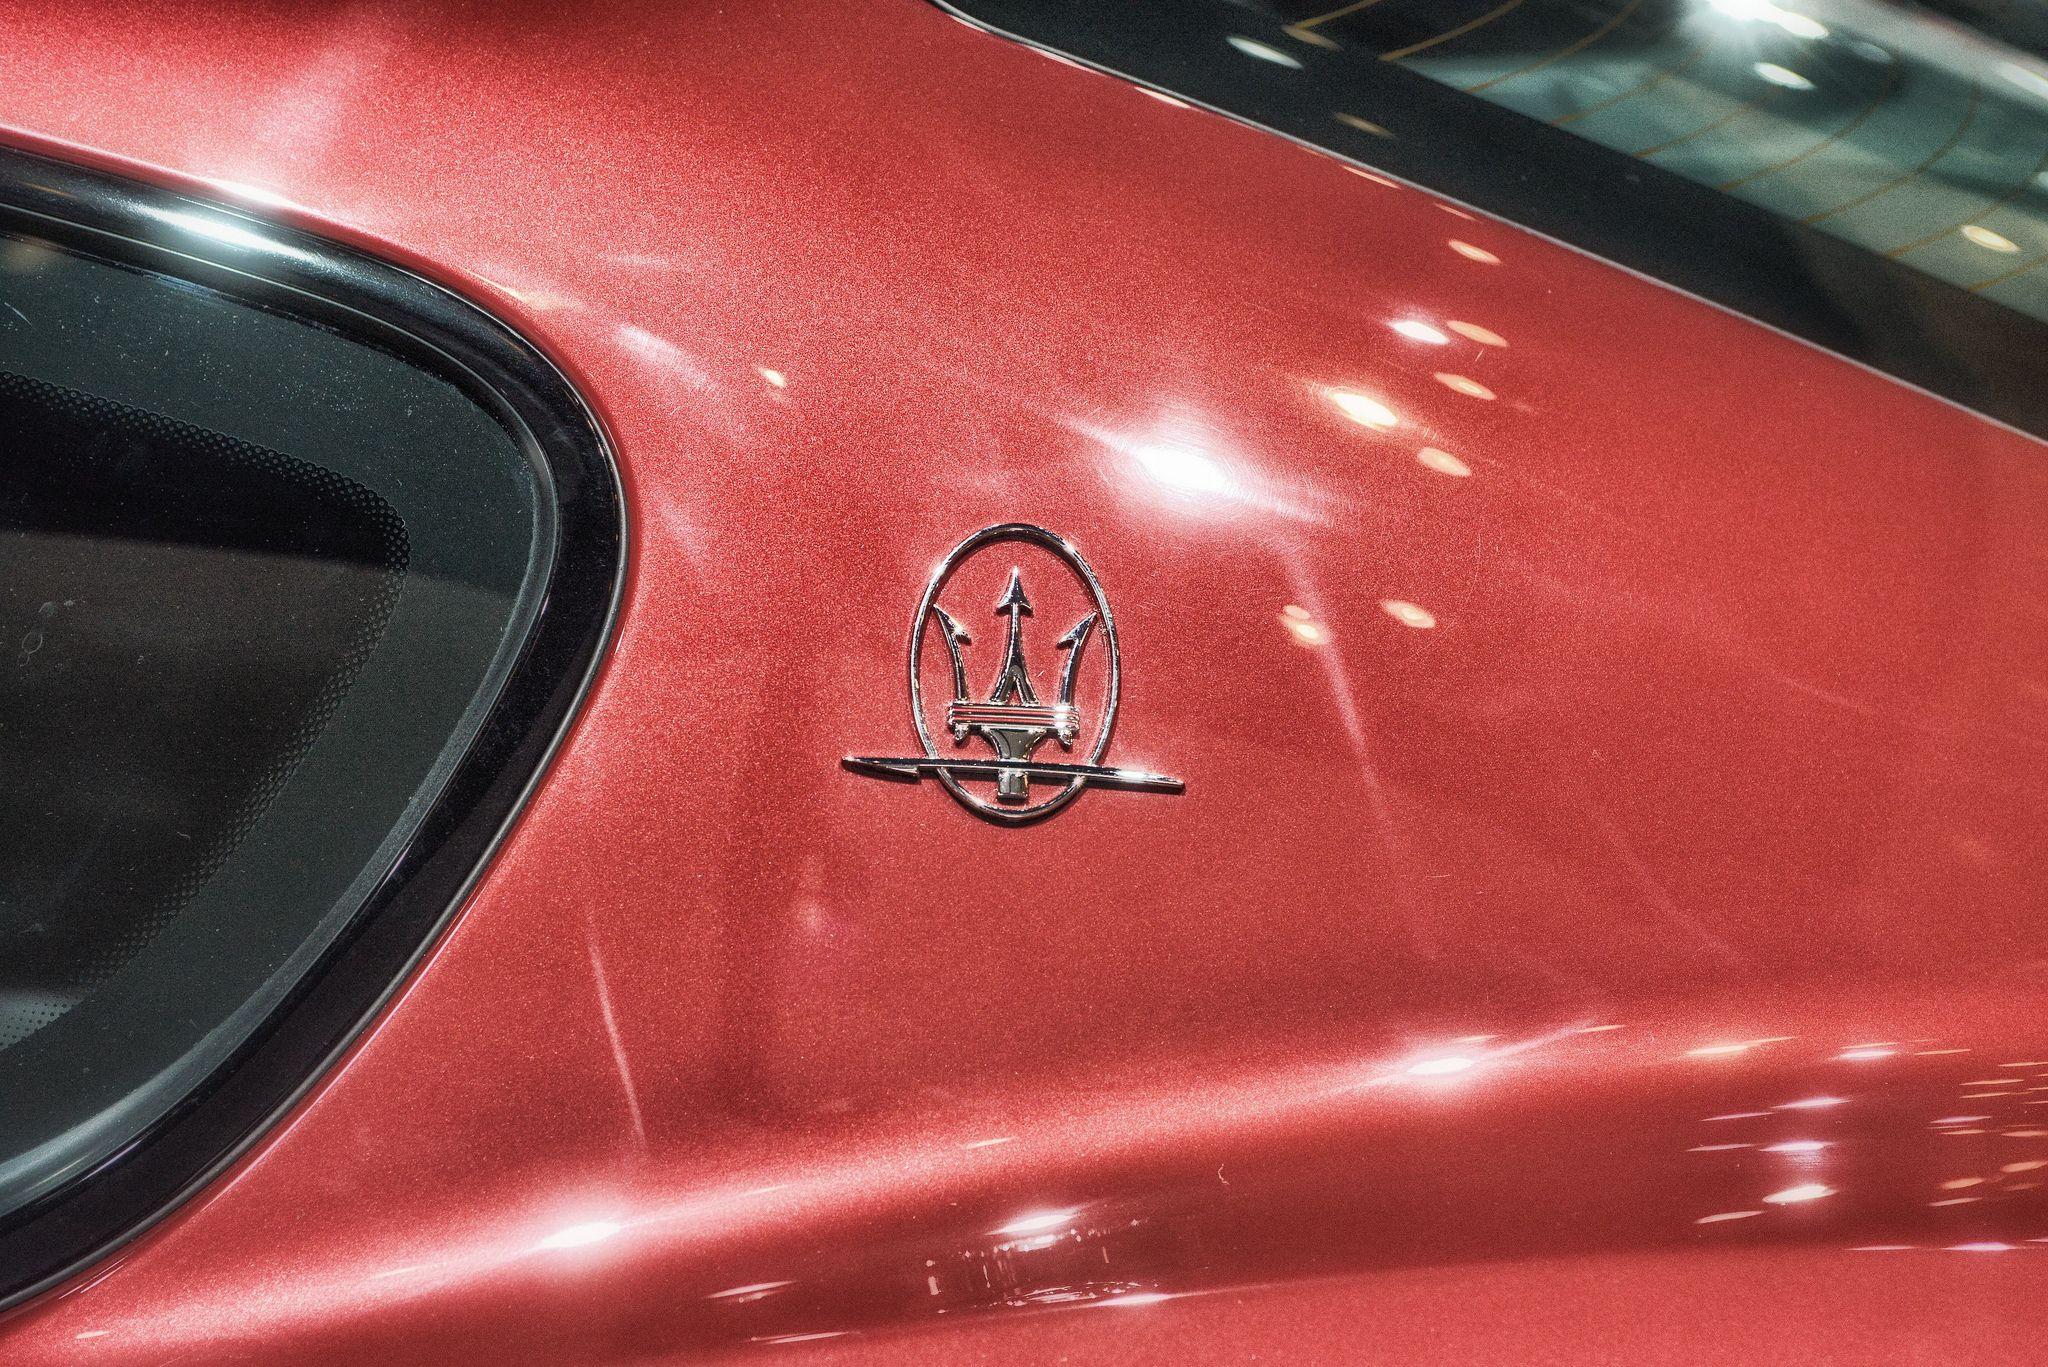 Red Maserati Logo - Maserati Logo On Side of Red Car | Anton Stetner | Flickr